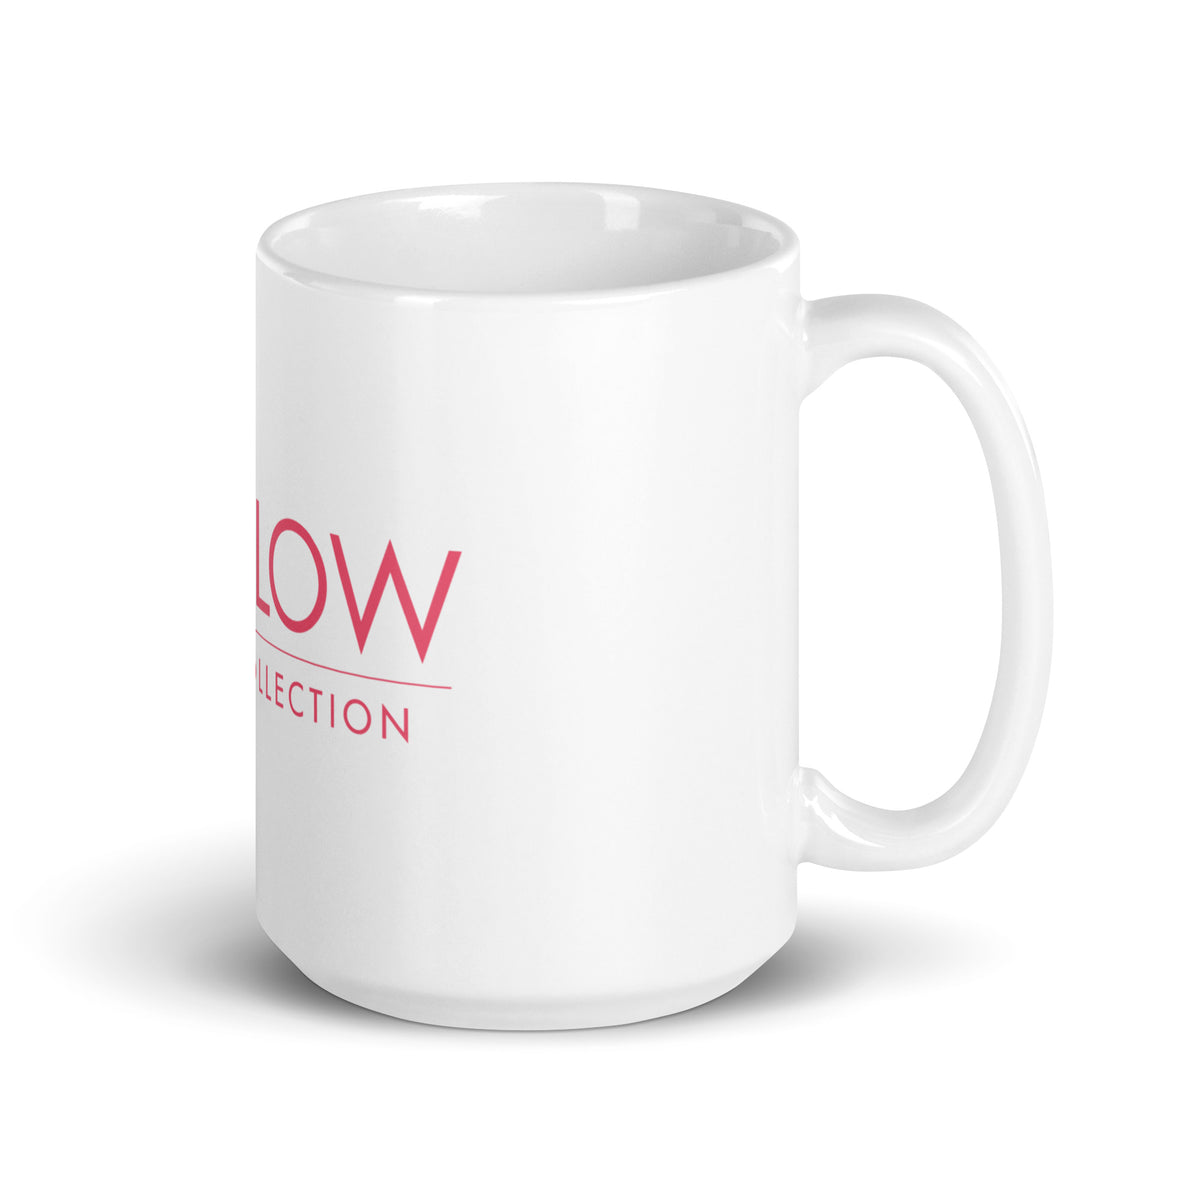 Glow Collection White glossy mug